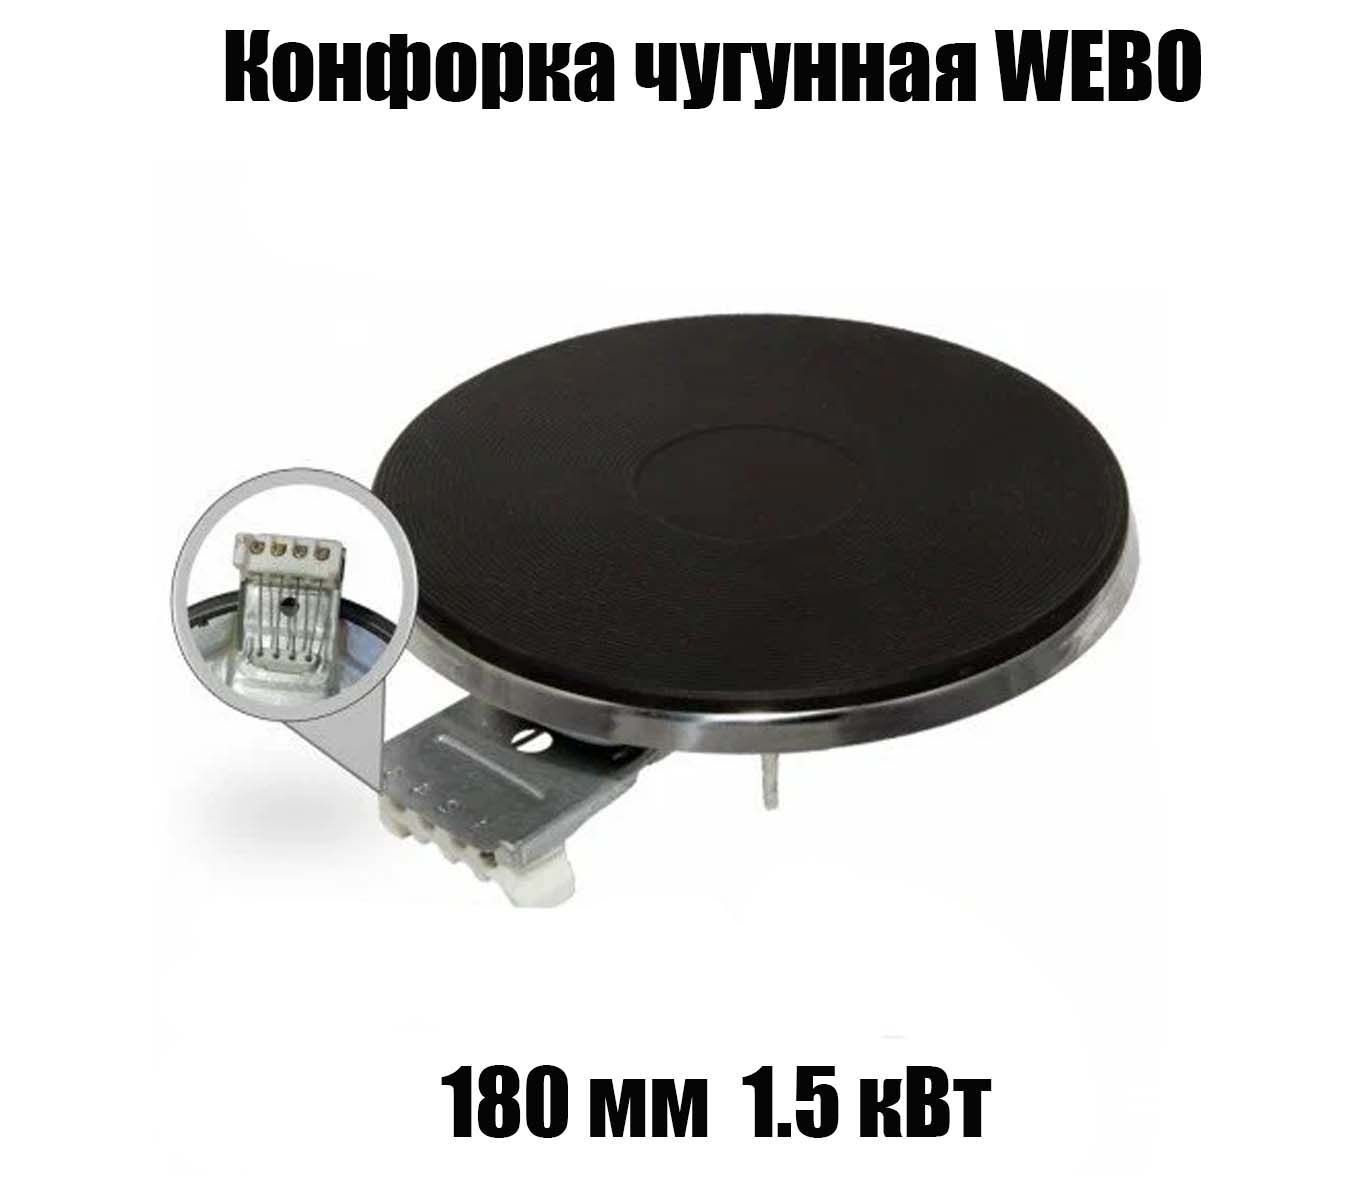 КомфоркачугуннаяэлектрическаяWEBO,диаметр180мм,мощность1500Вт